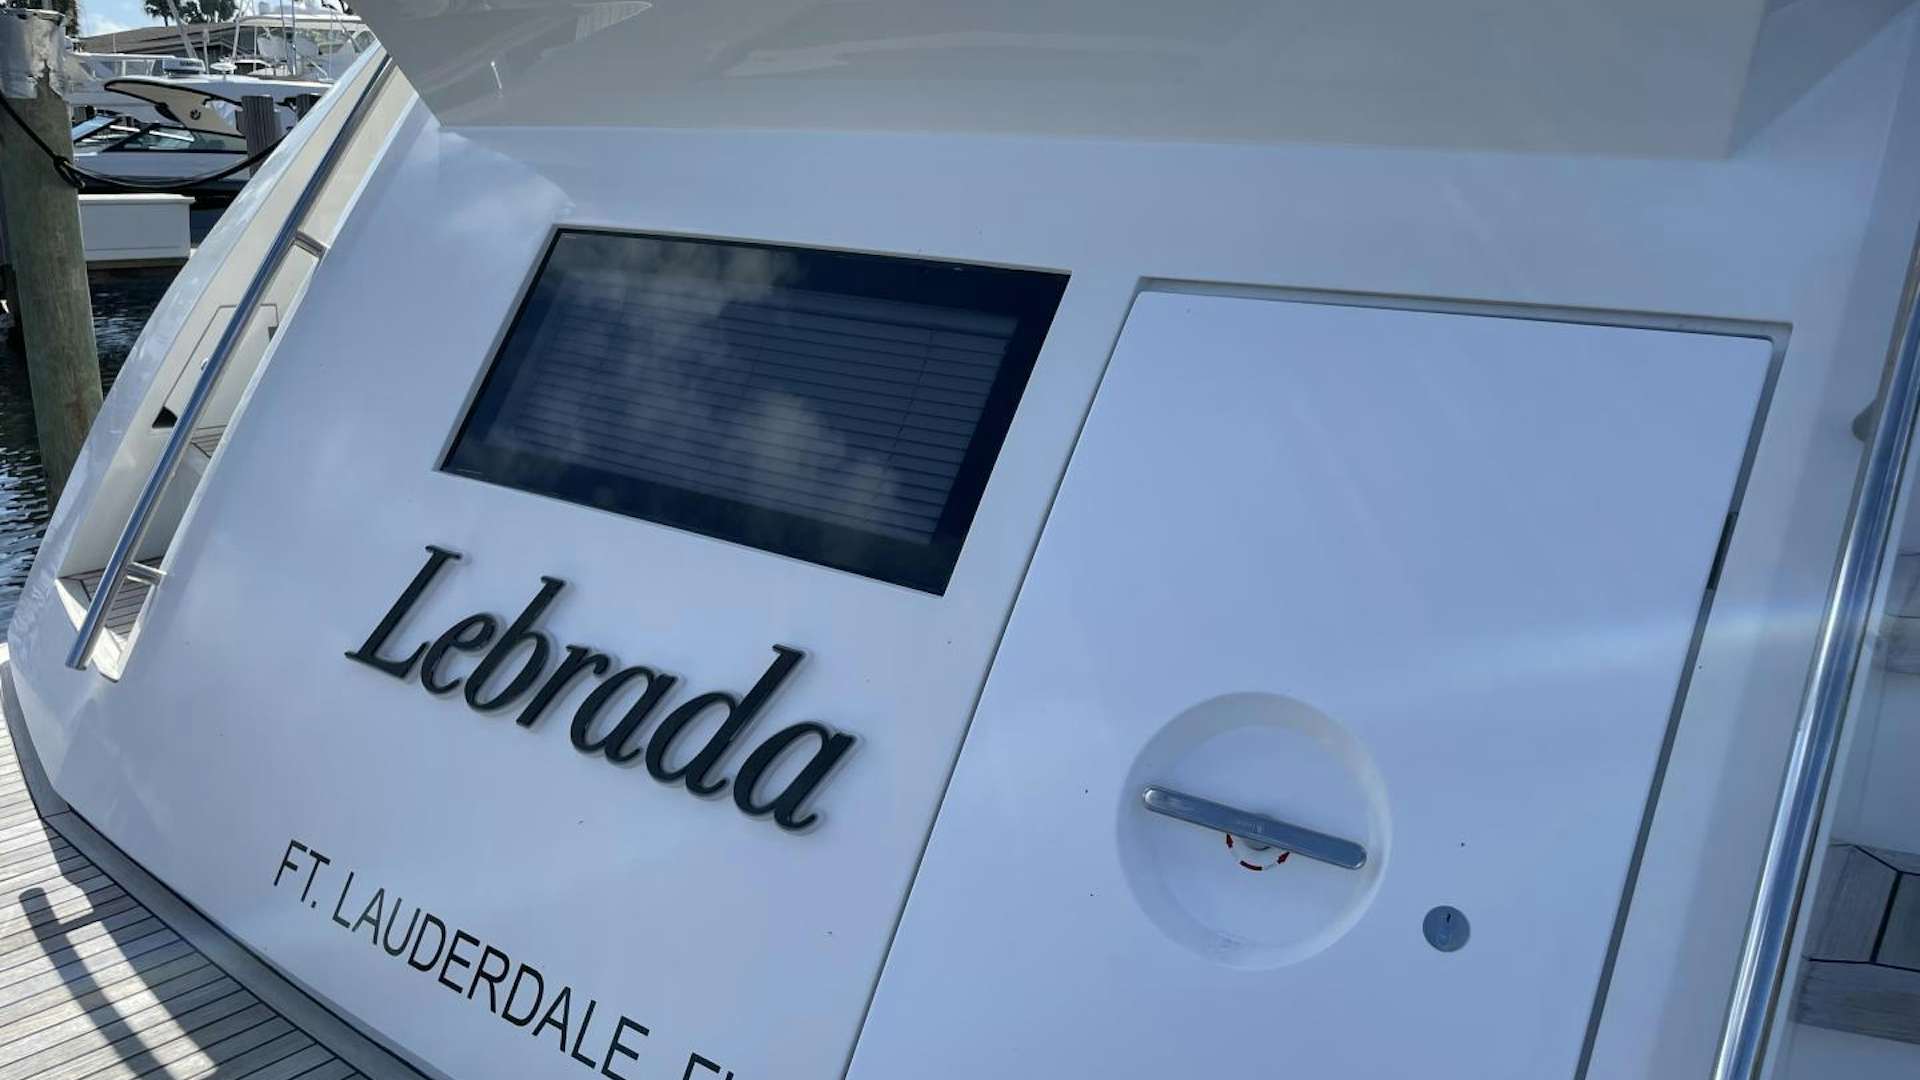 Lebrada
Yacht for Sale